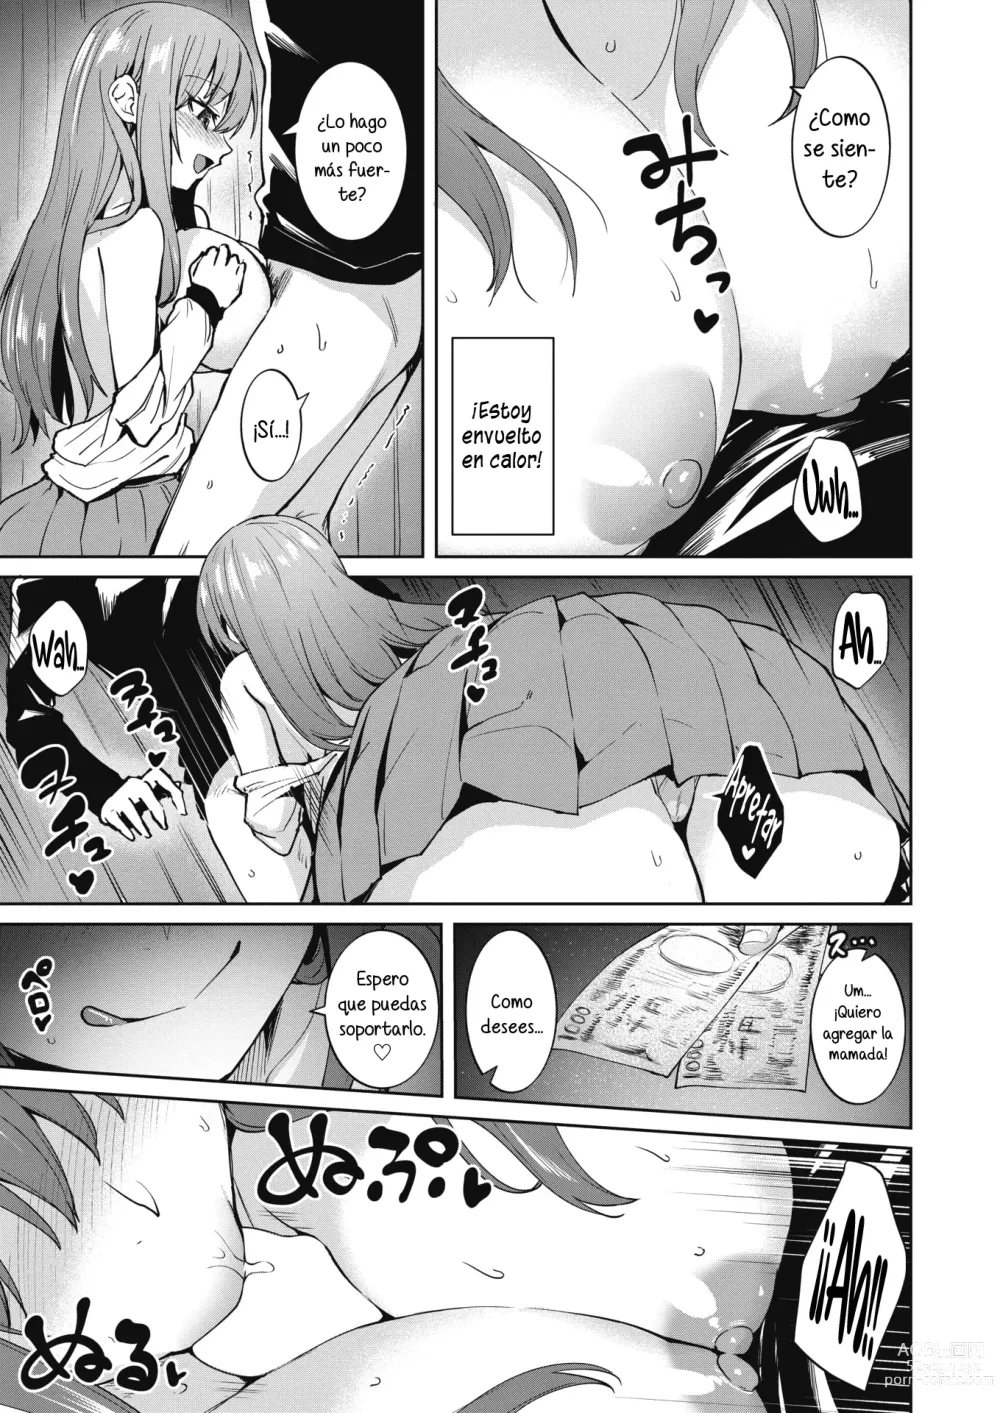 Page 13 of manga Dore ni Suru? - Which ecstasy do you want?